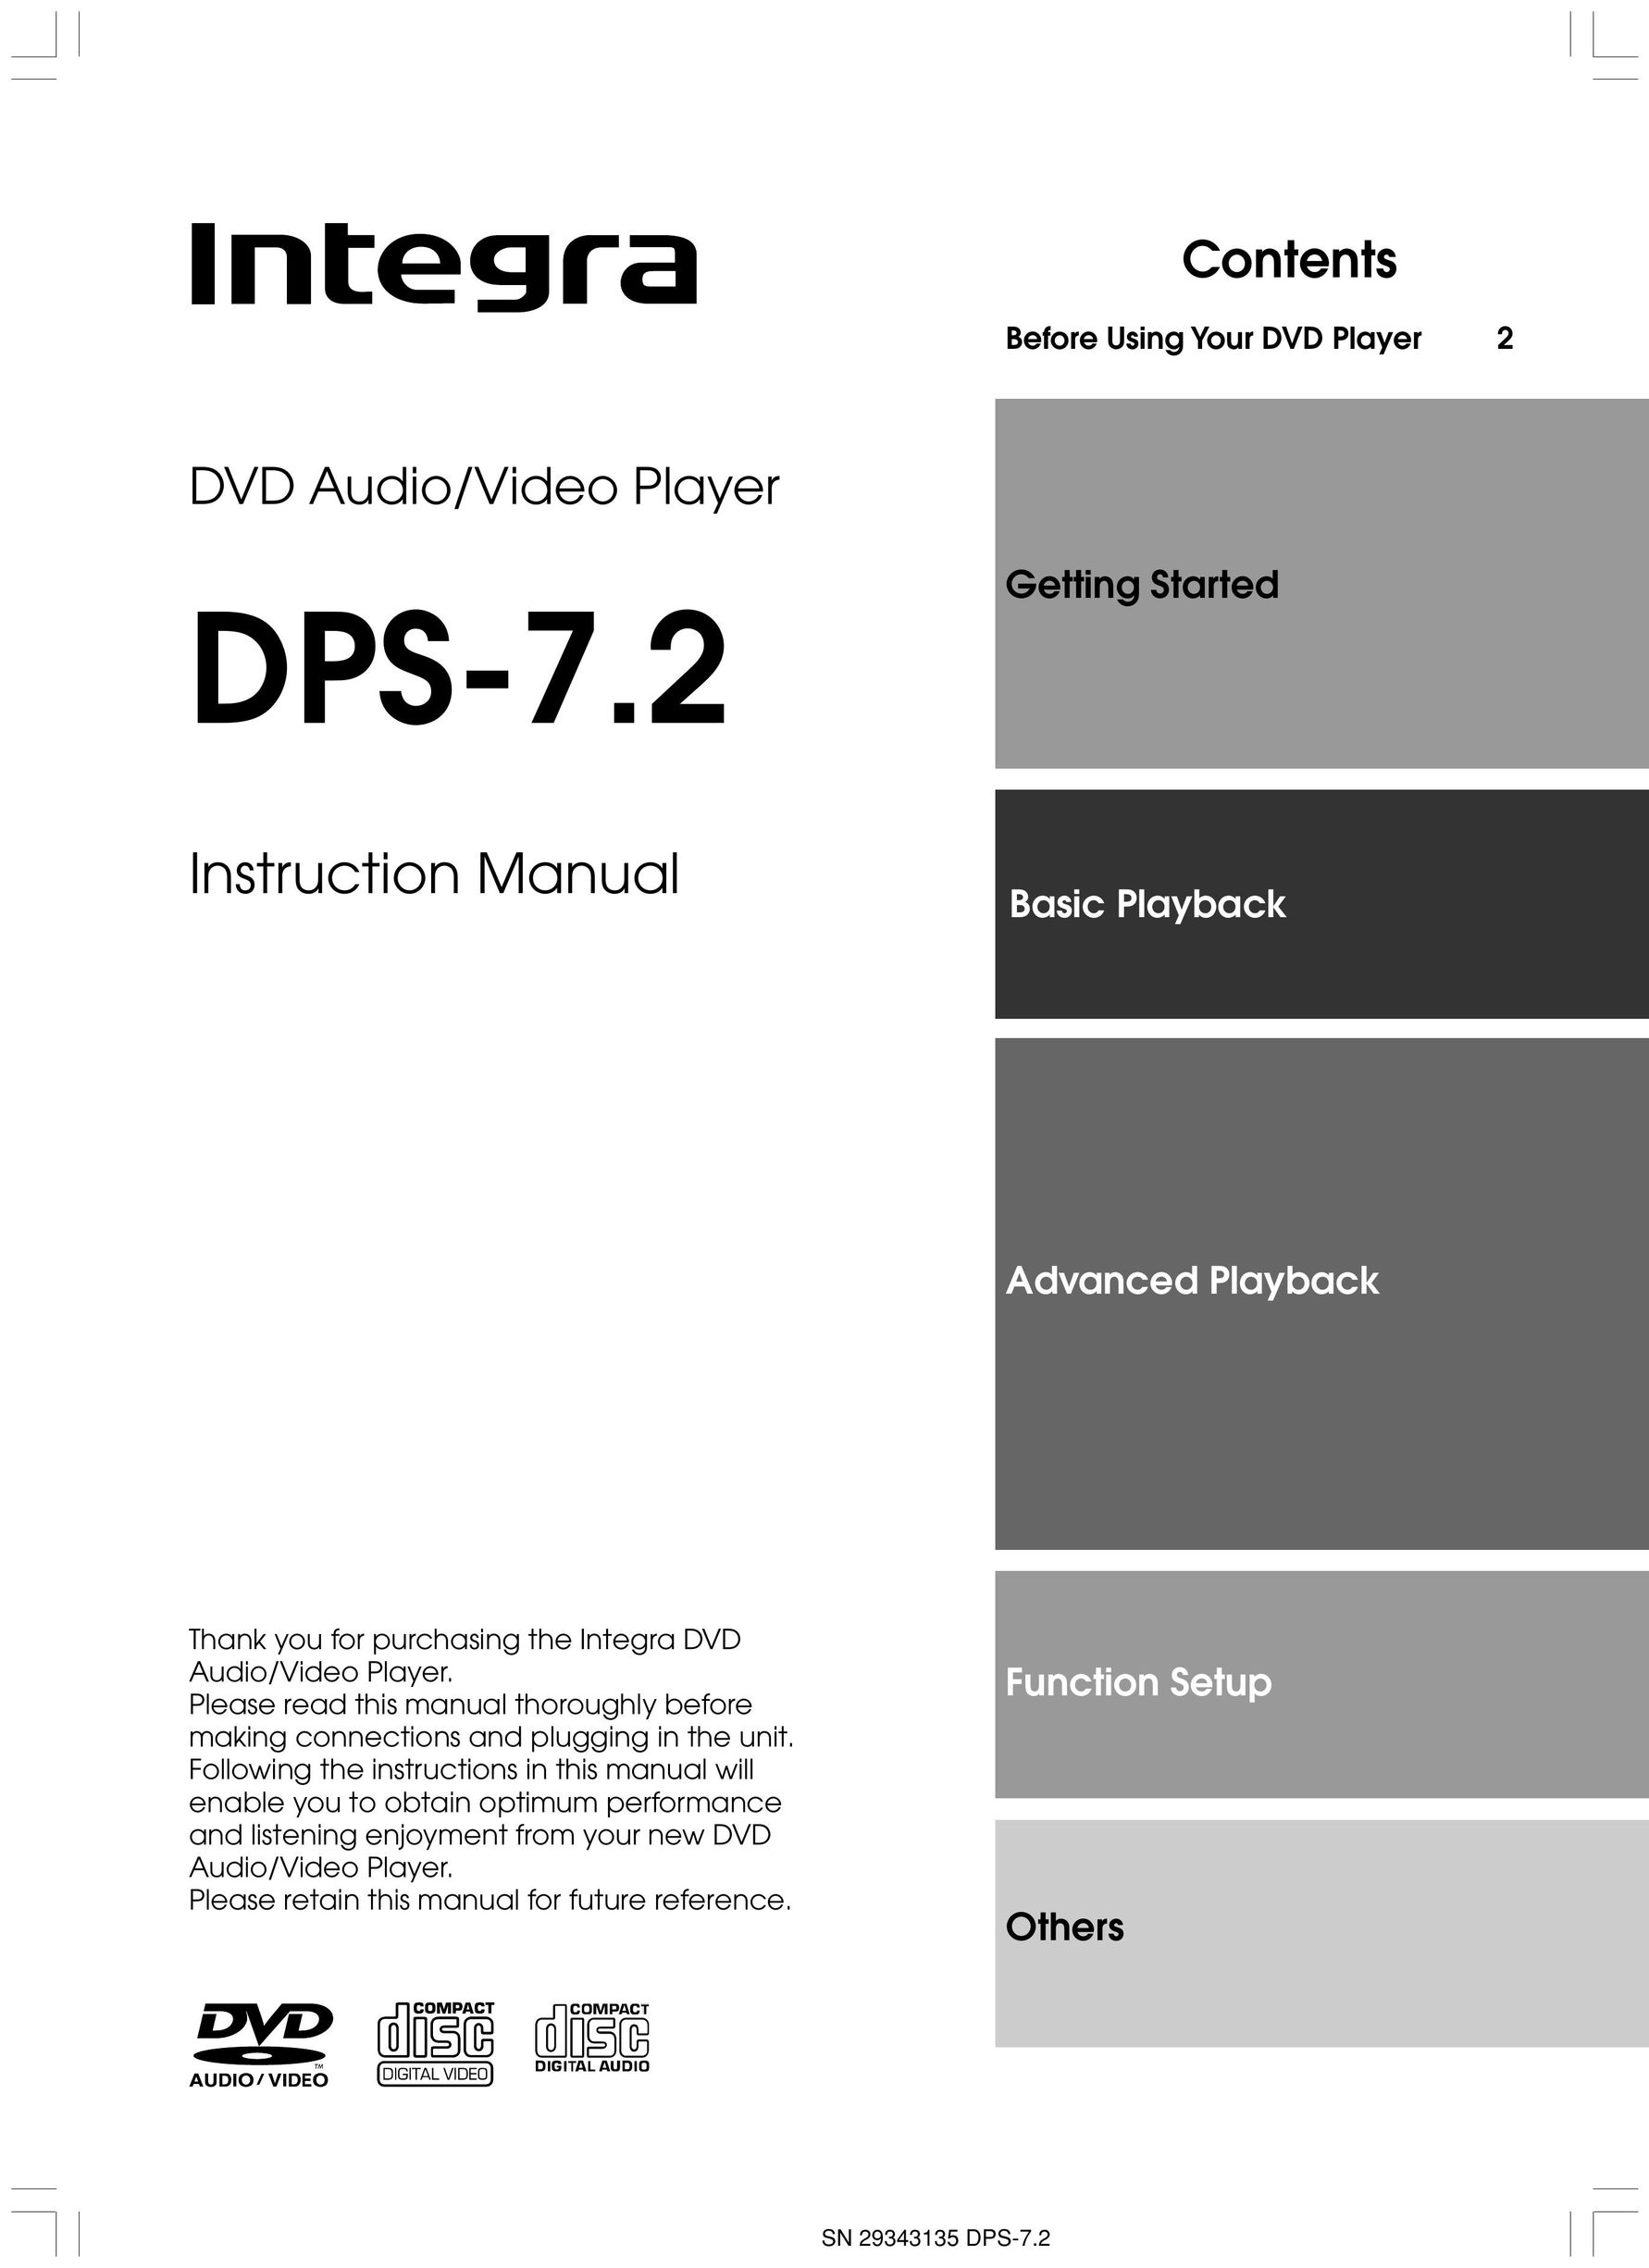 Integra DPS-7.2 DVD Player User Manual